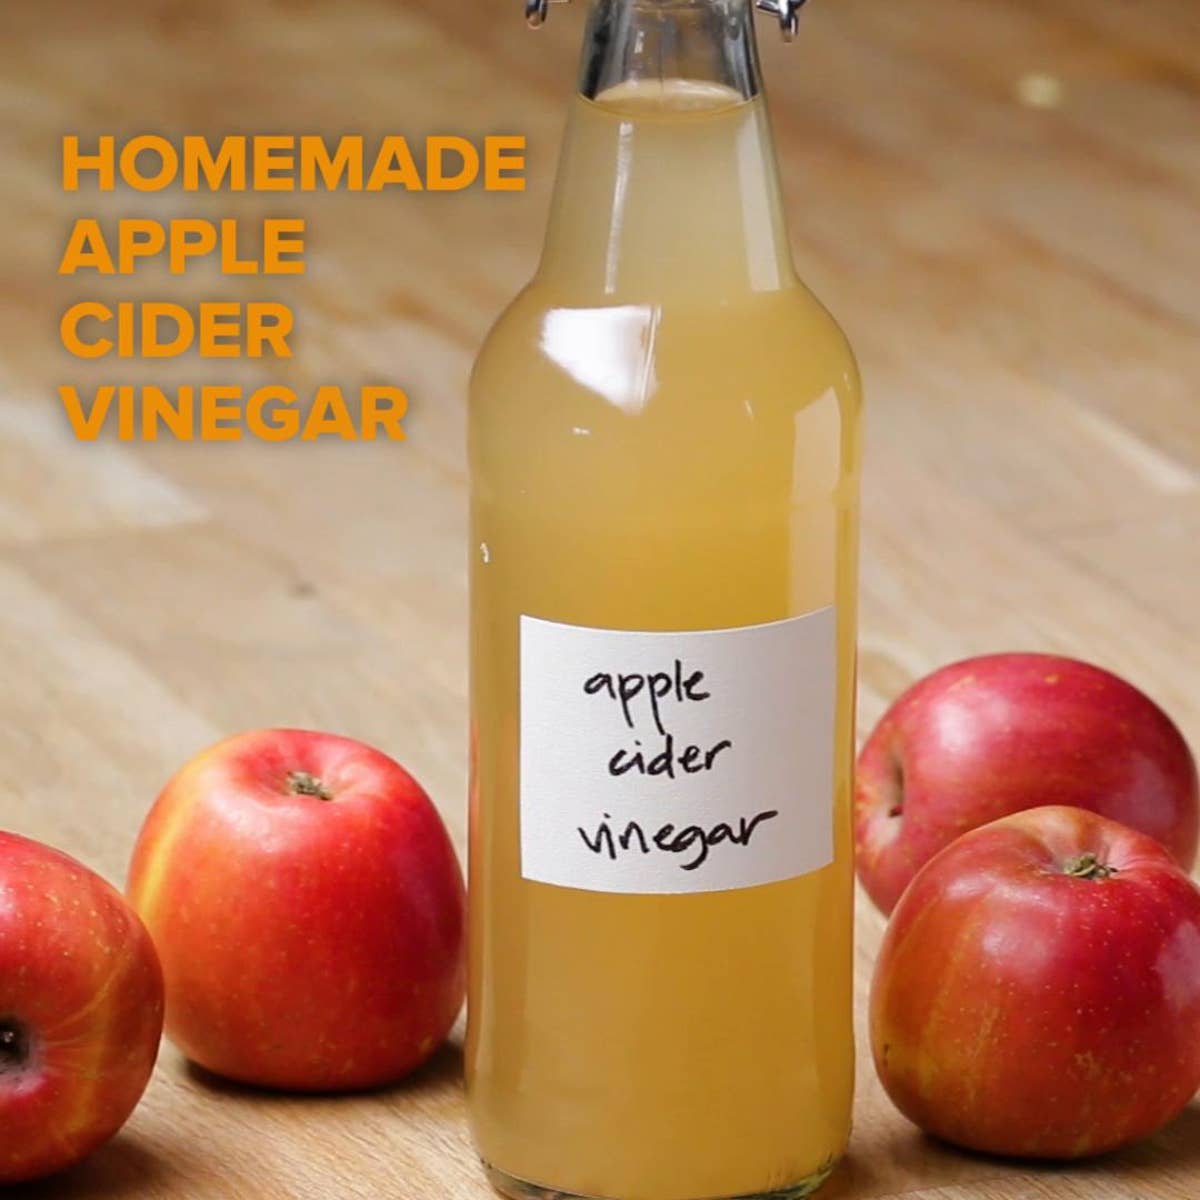 Nice! Apple Cider Vinegar